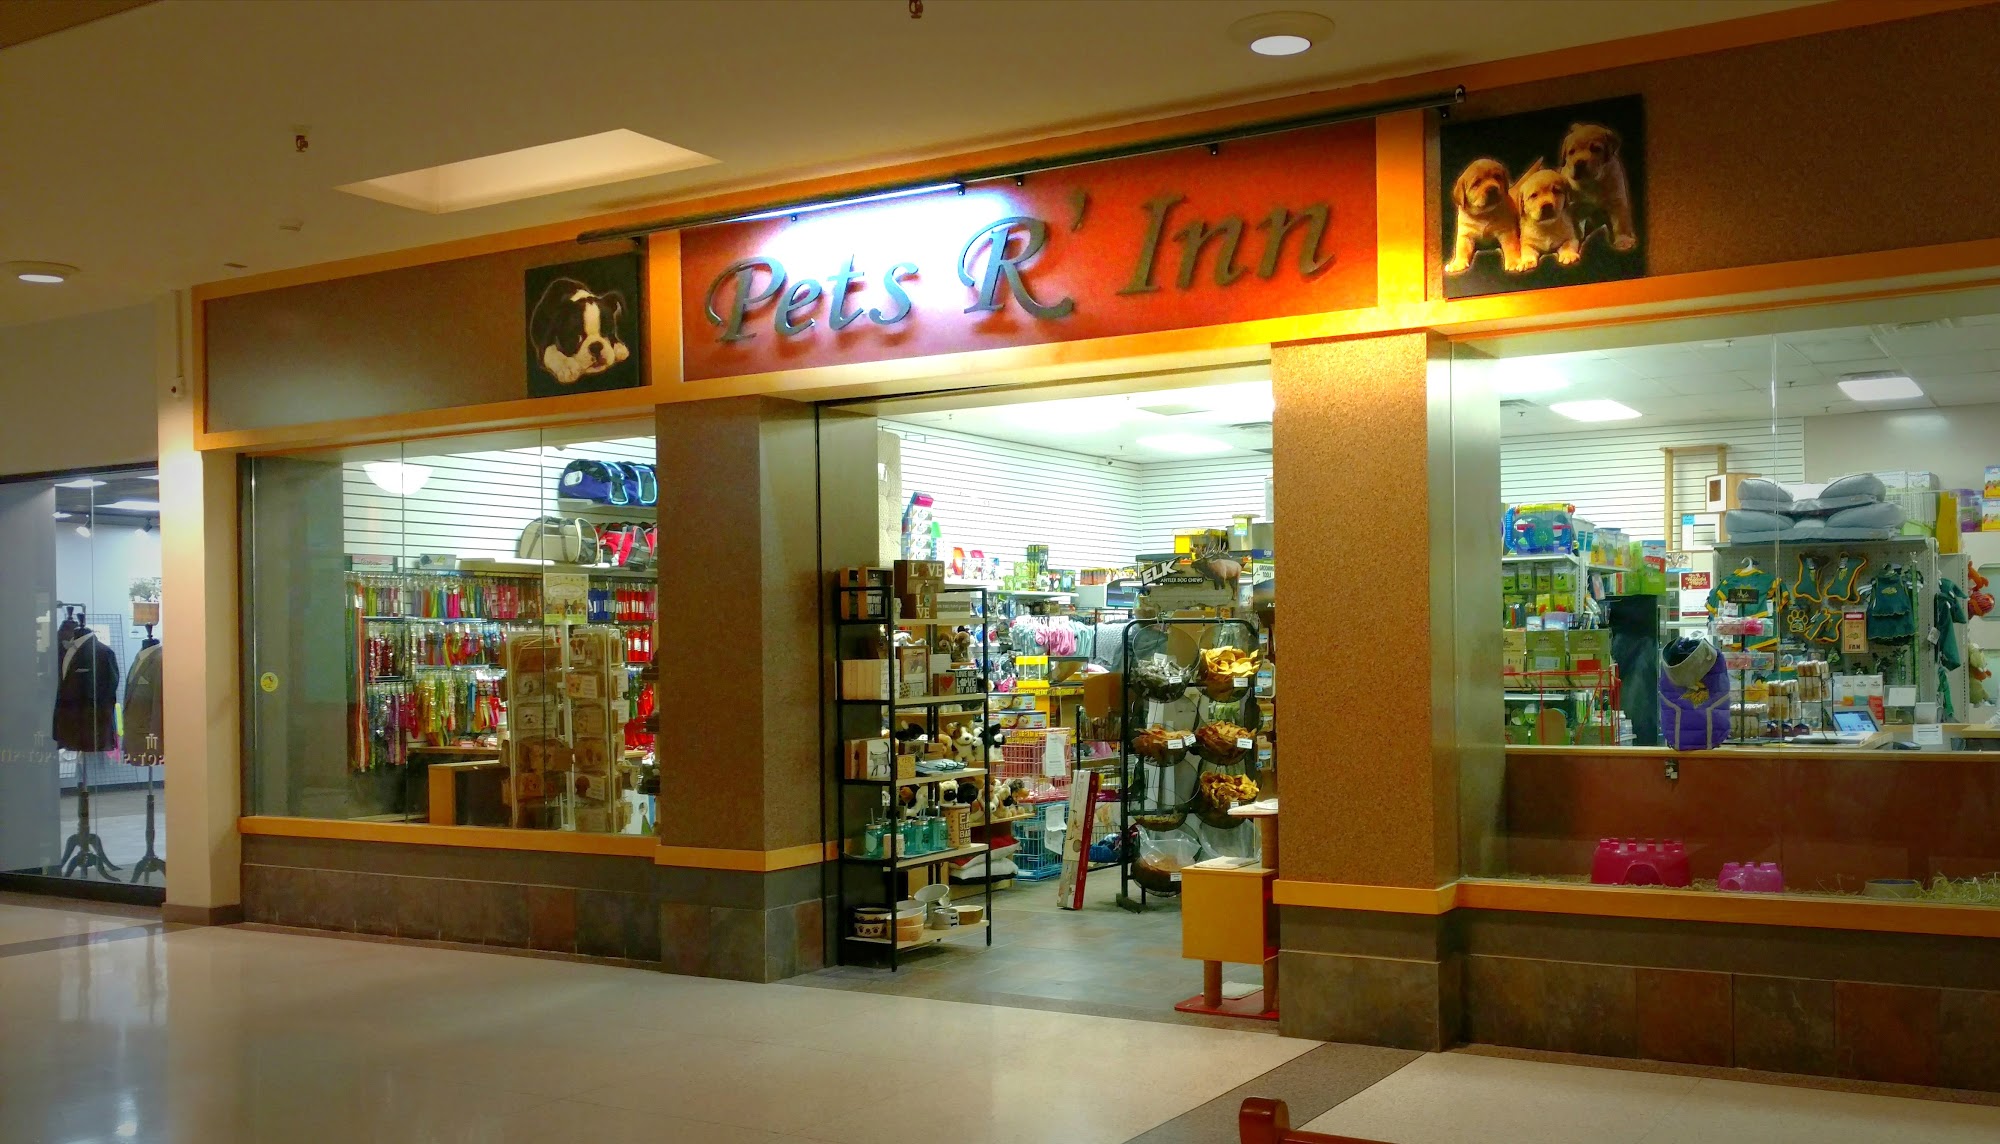 Pets R Inn